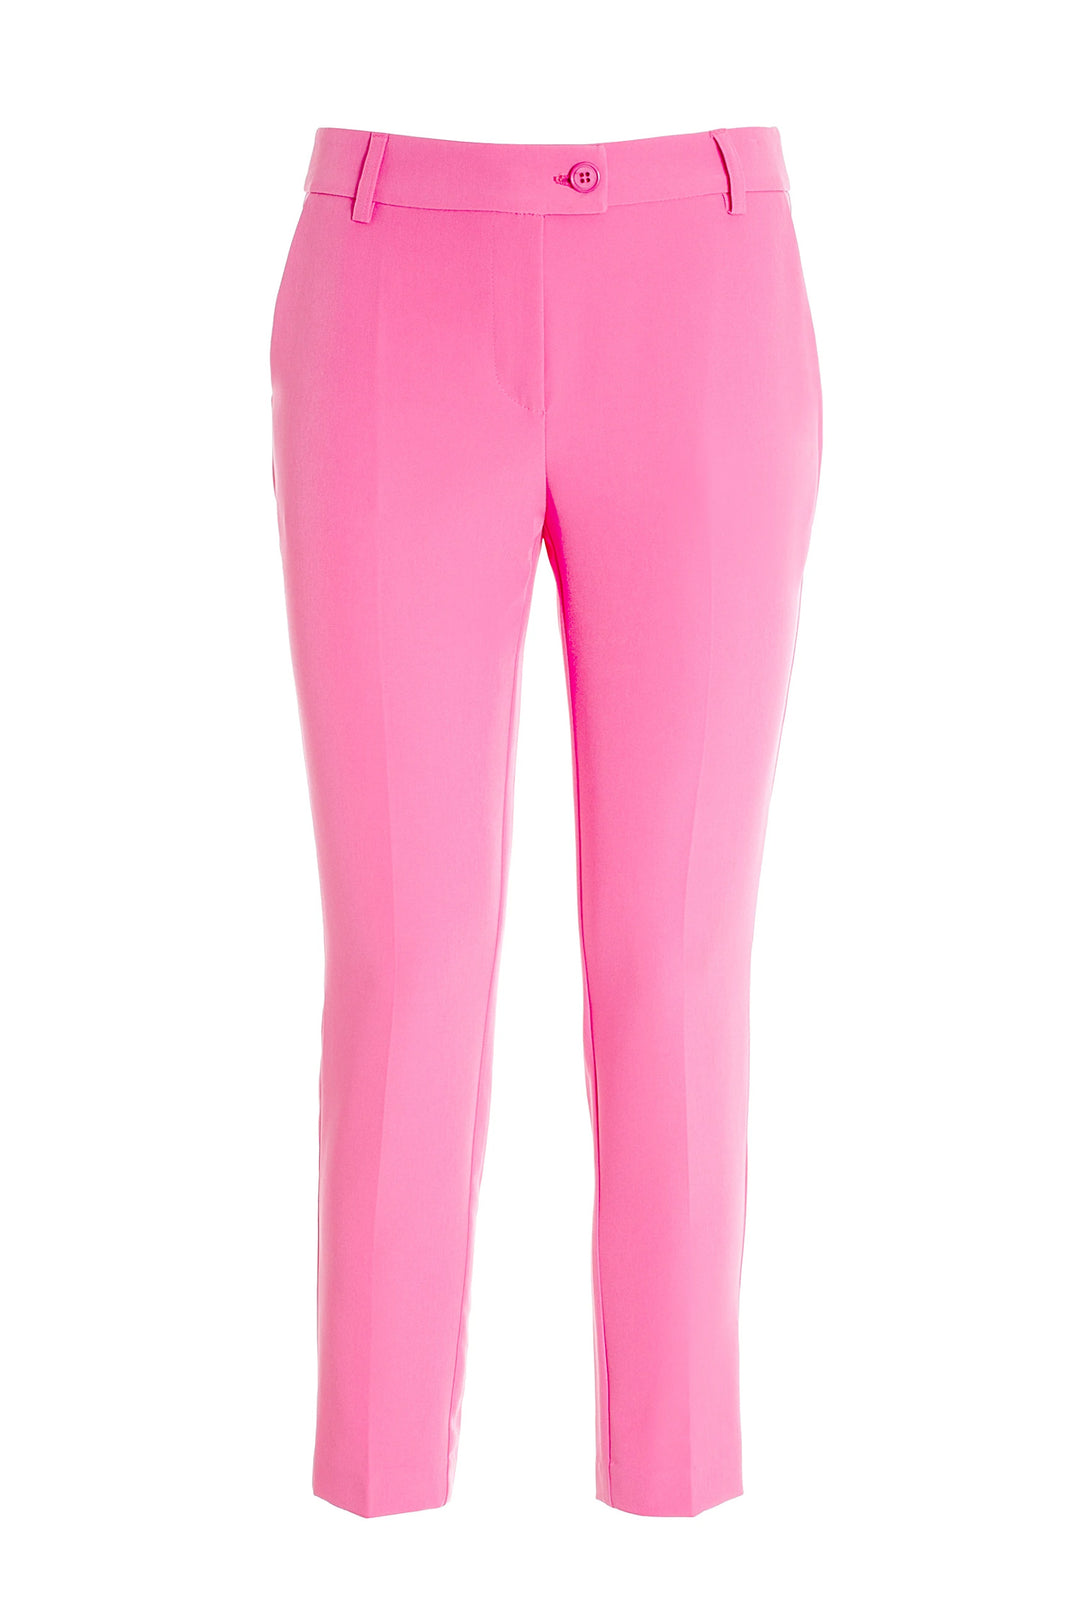 FRACOMINA Pantalone slim in tessuto tecnico rosa - Mancinelli 1954